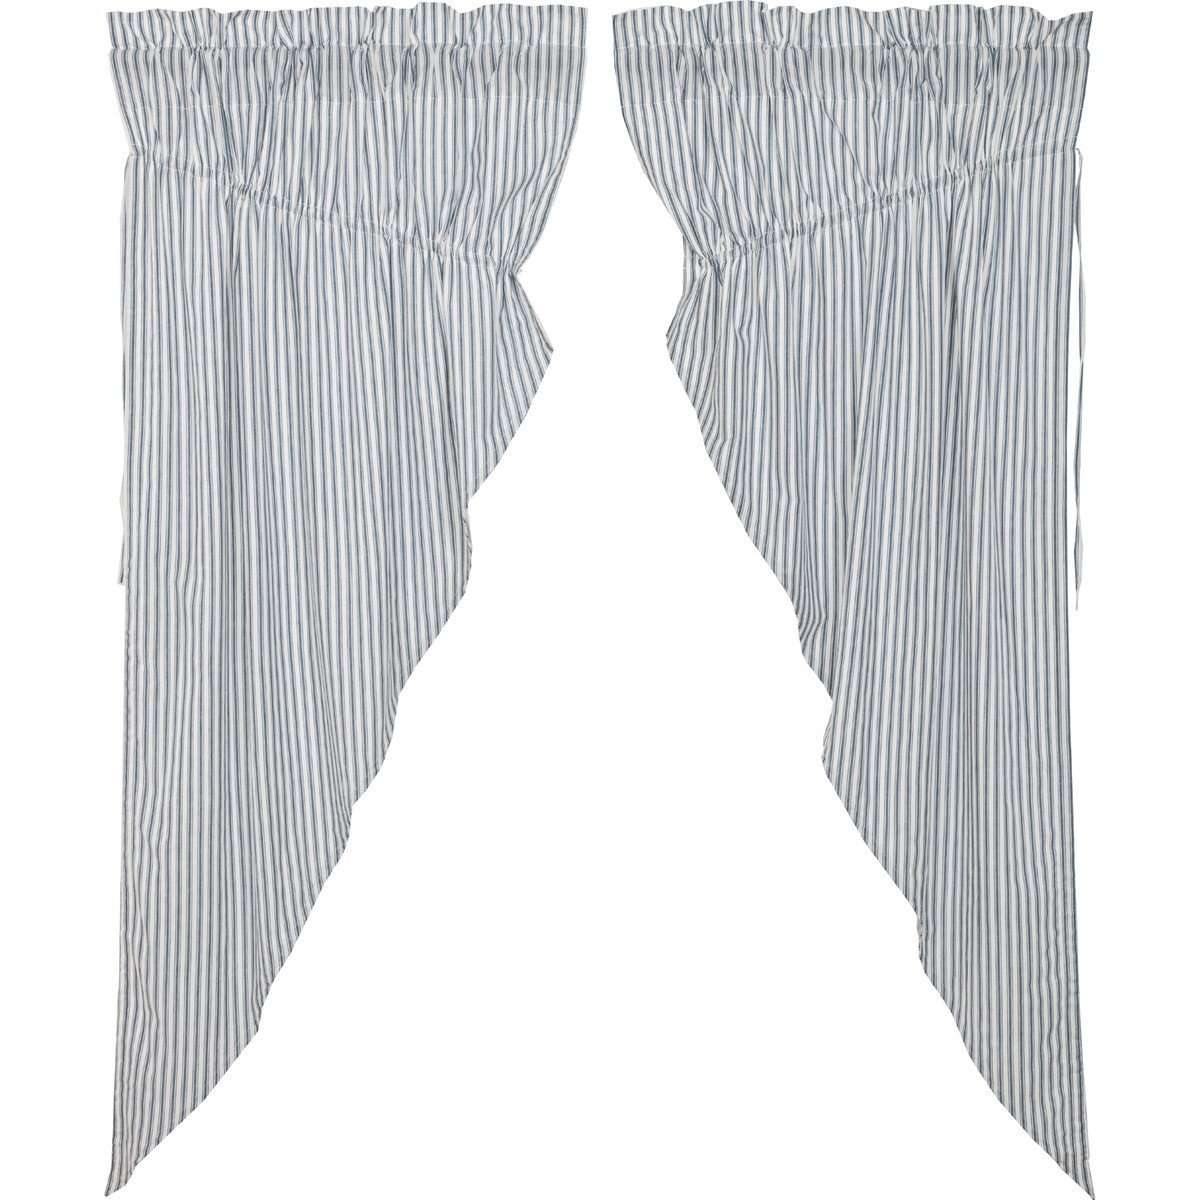 Sawyer Mill Blue Ticking Stripe Prairie Short Panel Curtain Set of 2 63x36x18 VHC Brands - The Fox Decor